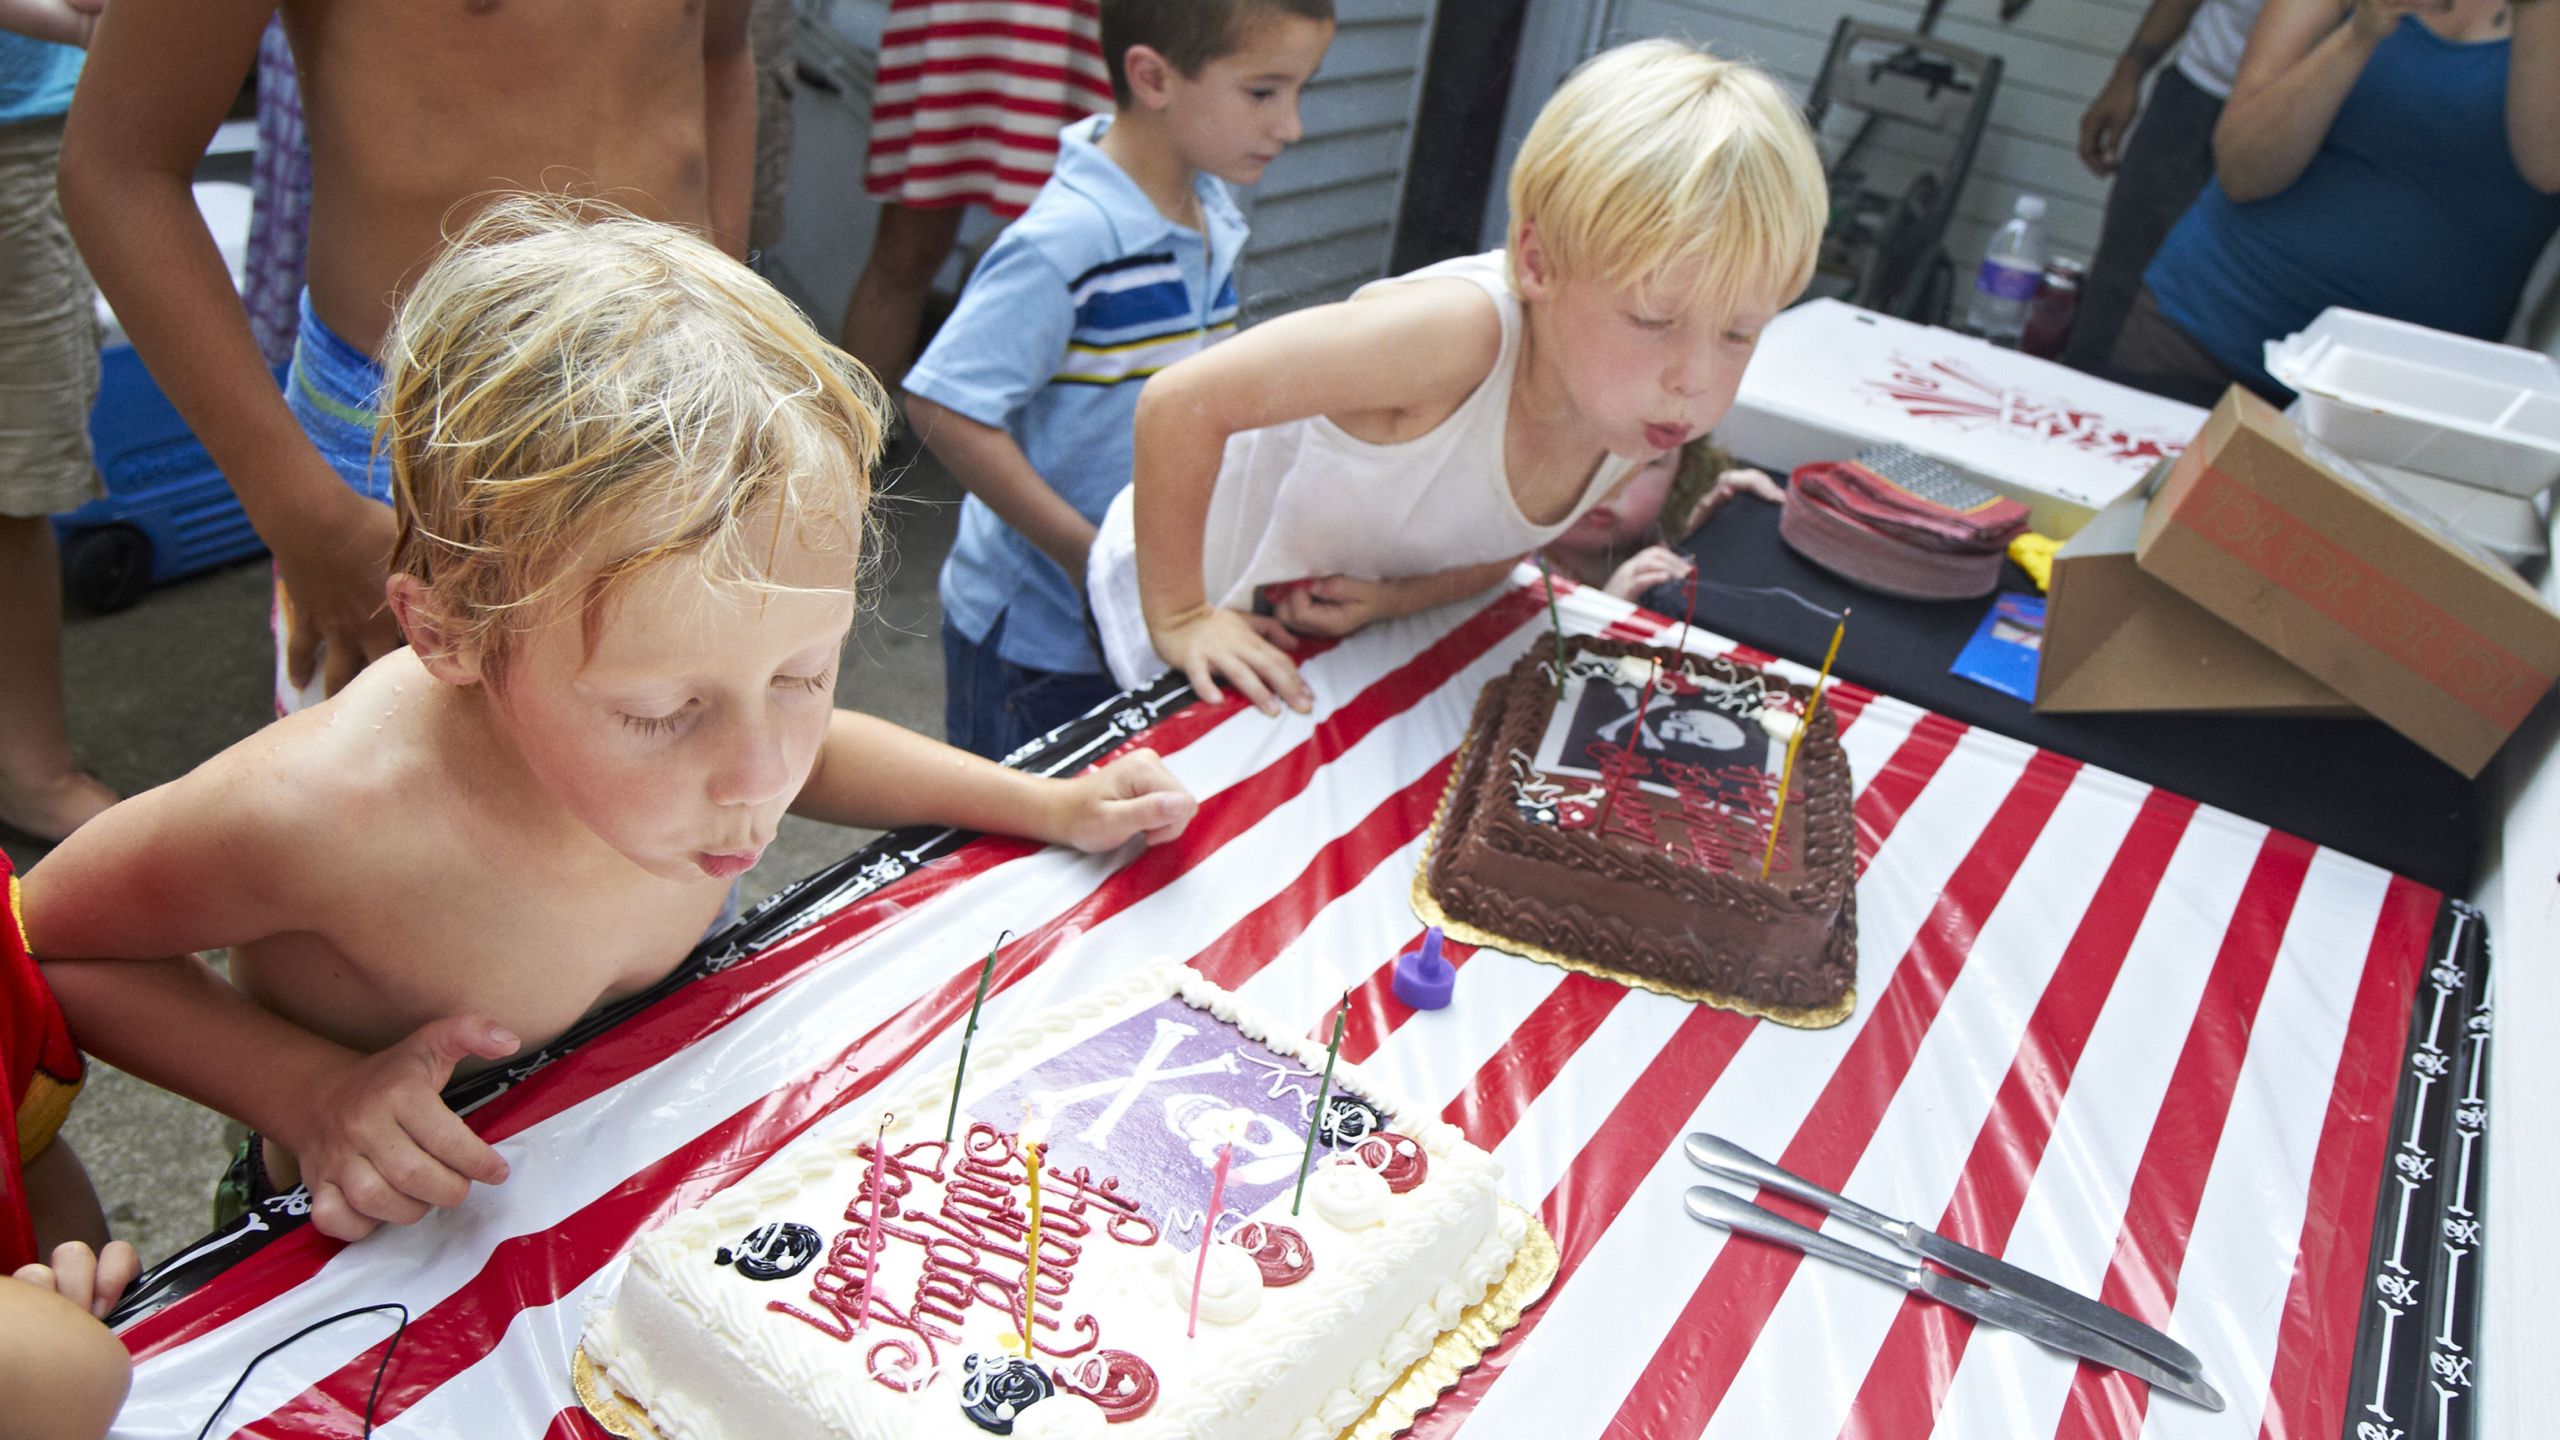 5 year old twin boys blowing out birthday candles b53df78c537b95ec6f